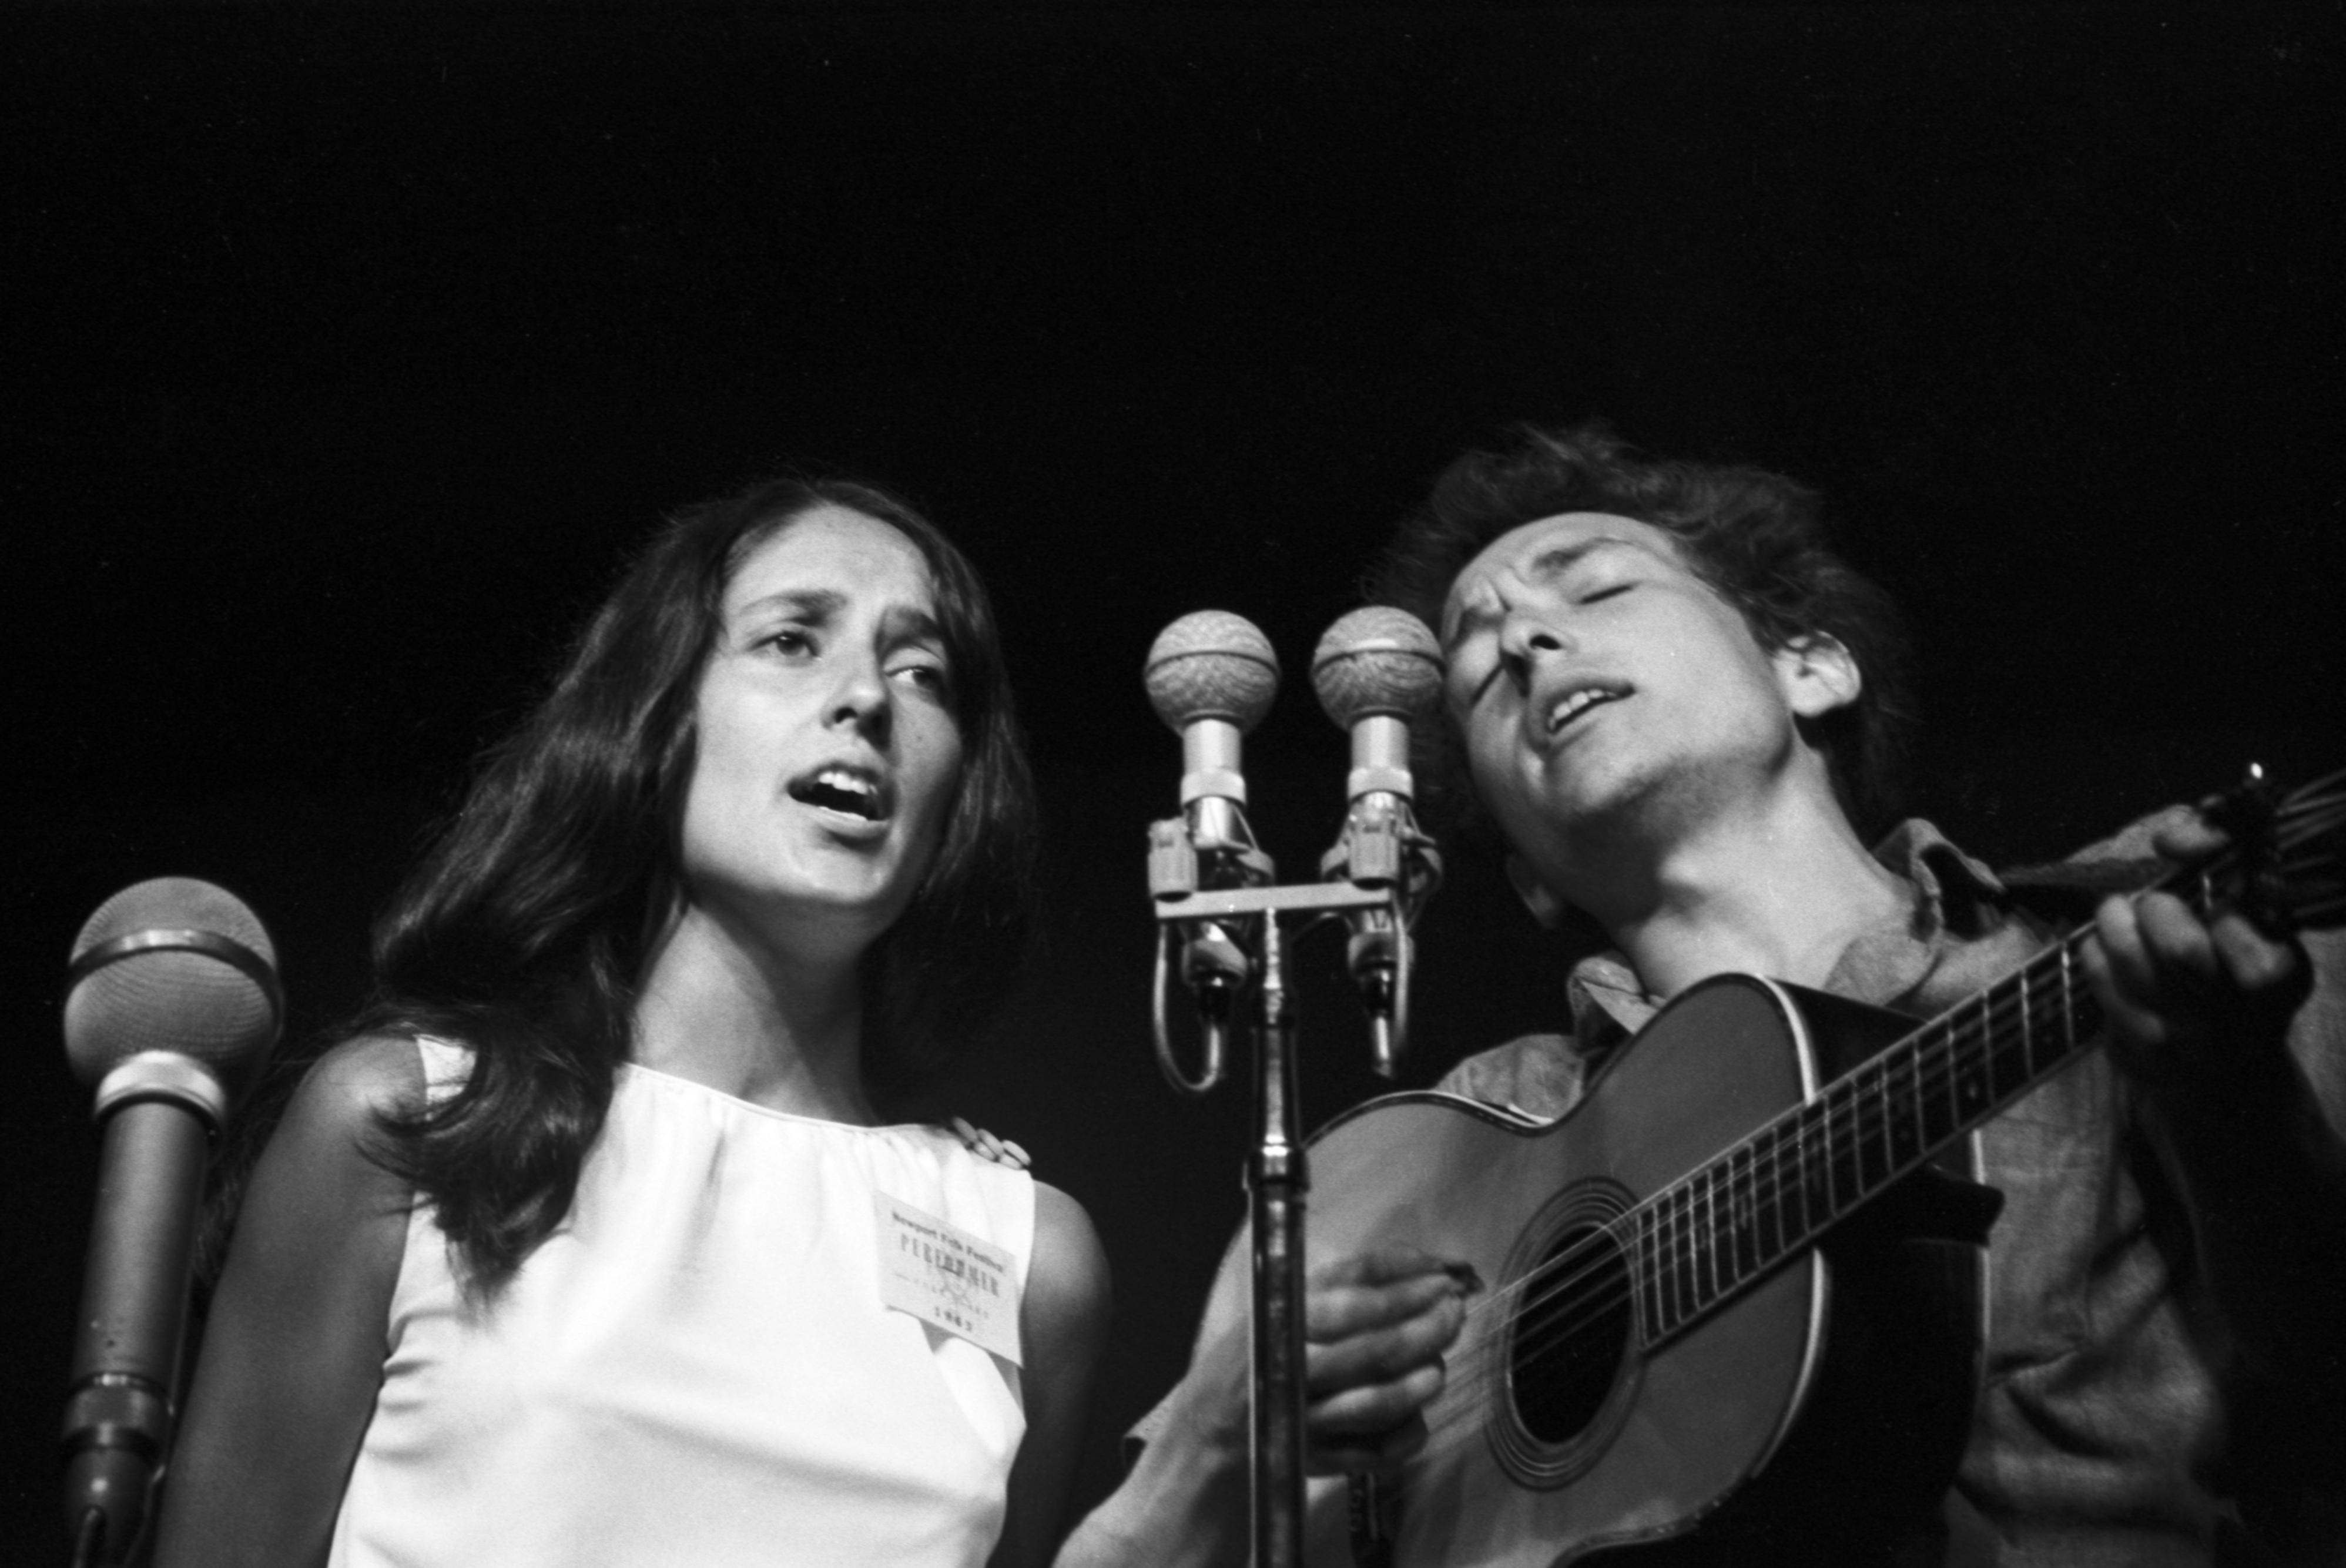 Bob Dylan & Joan Baez, Black & White Photograph at Newport, 1963